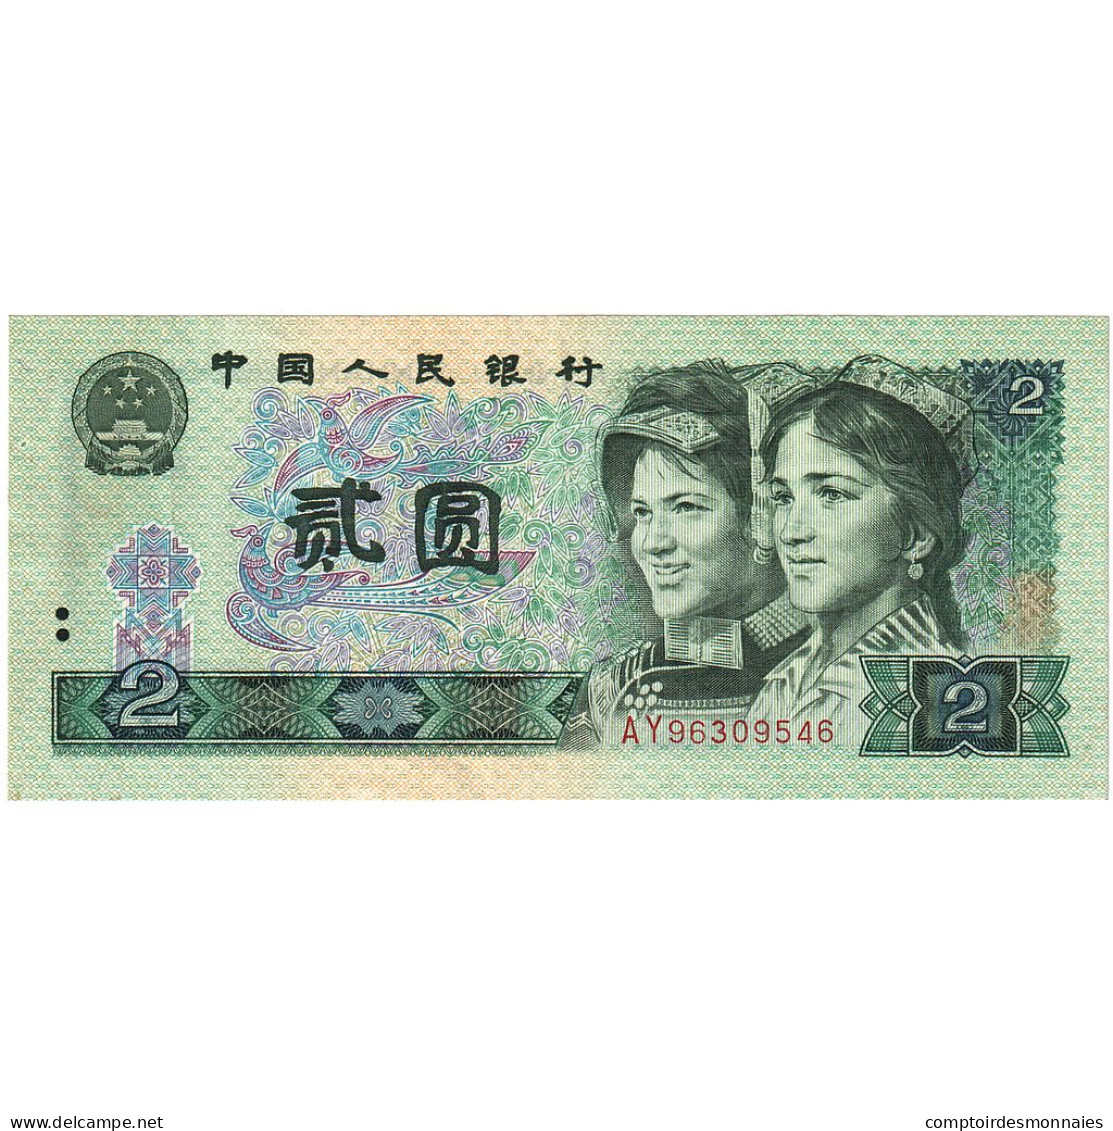 Billet, Chine, 2 Yüan, 1980, KM:885b, NEUF - Chine